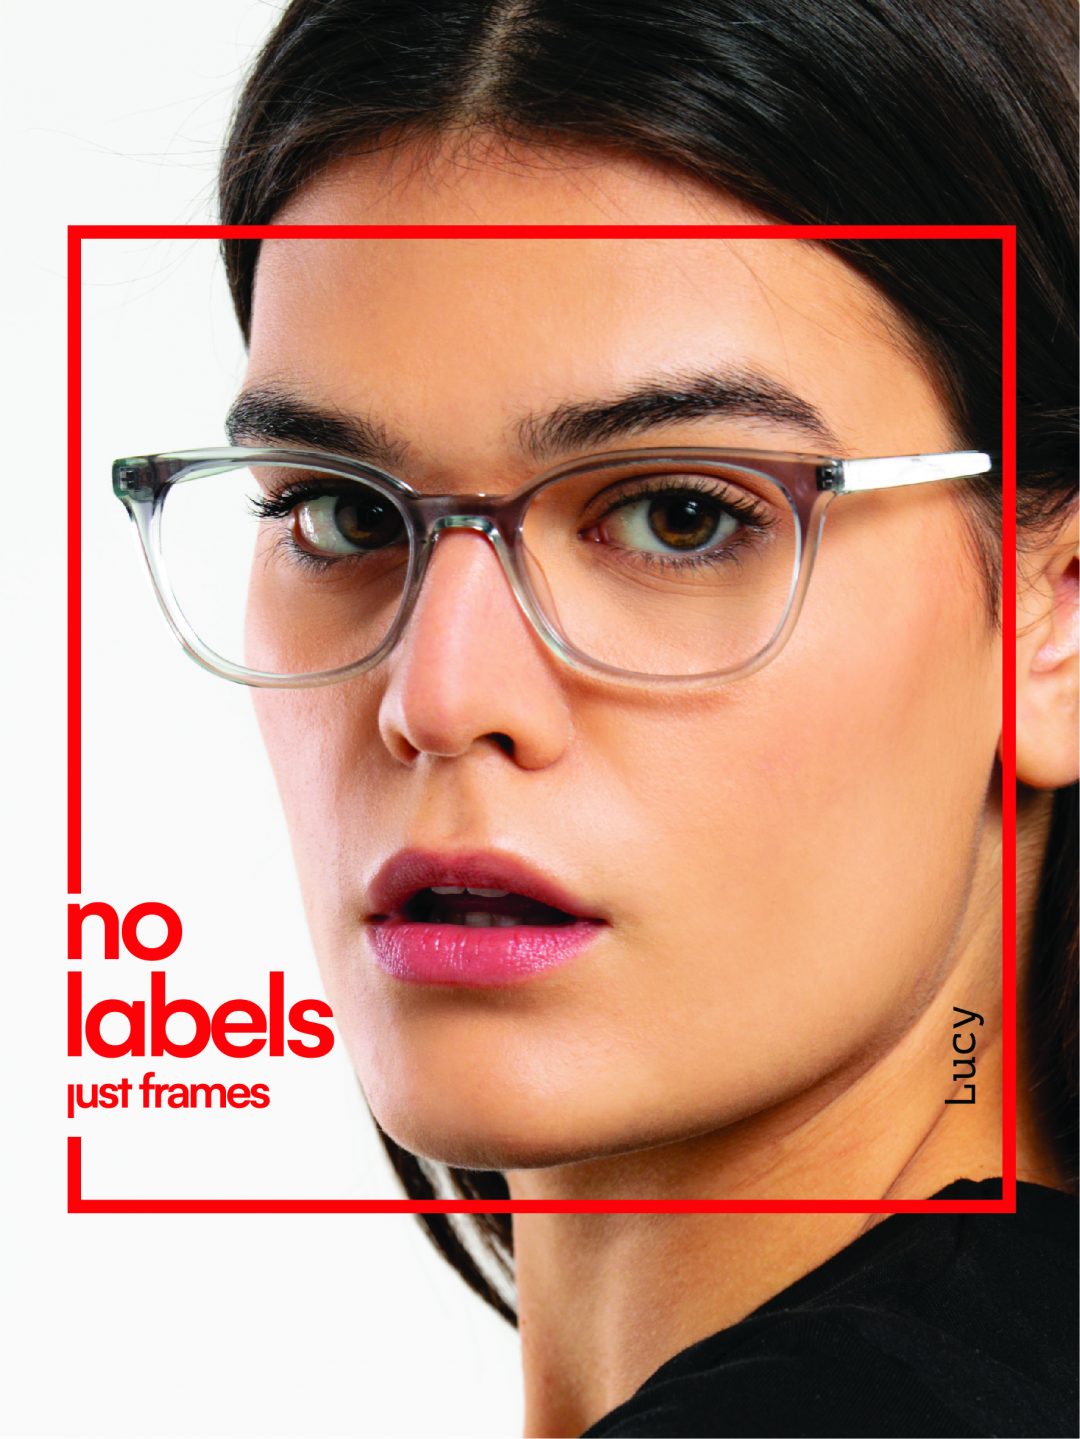 No-labels-just-frames-04